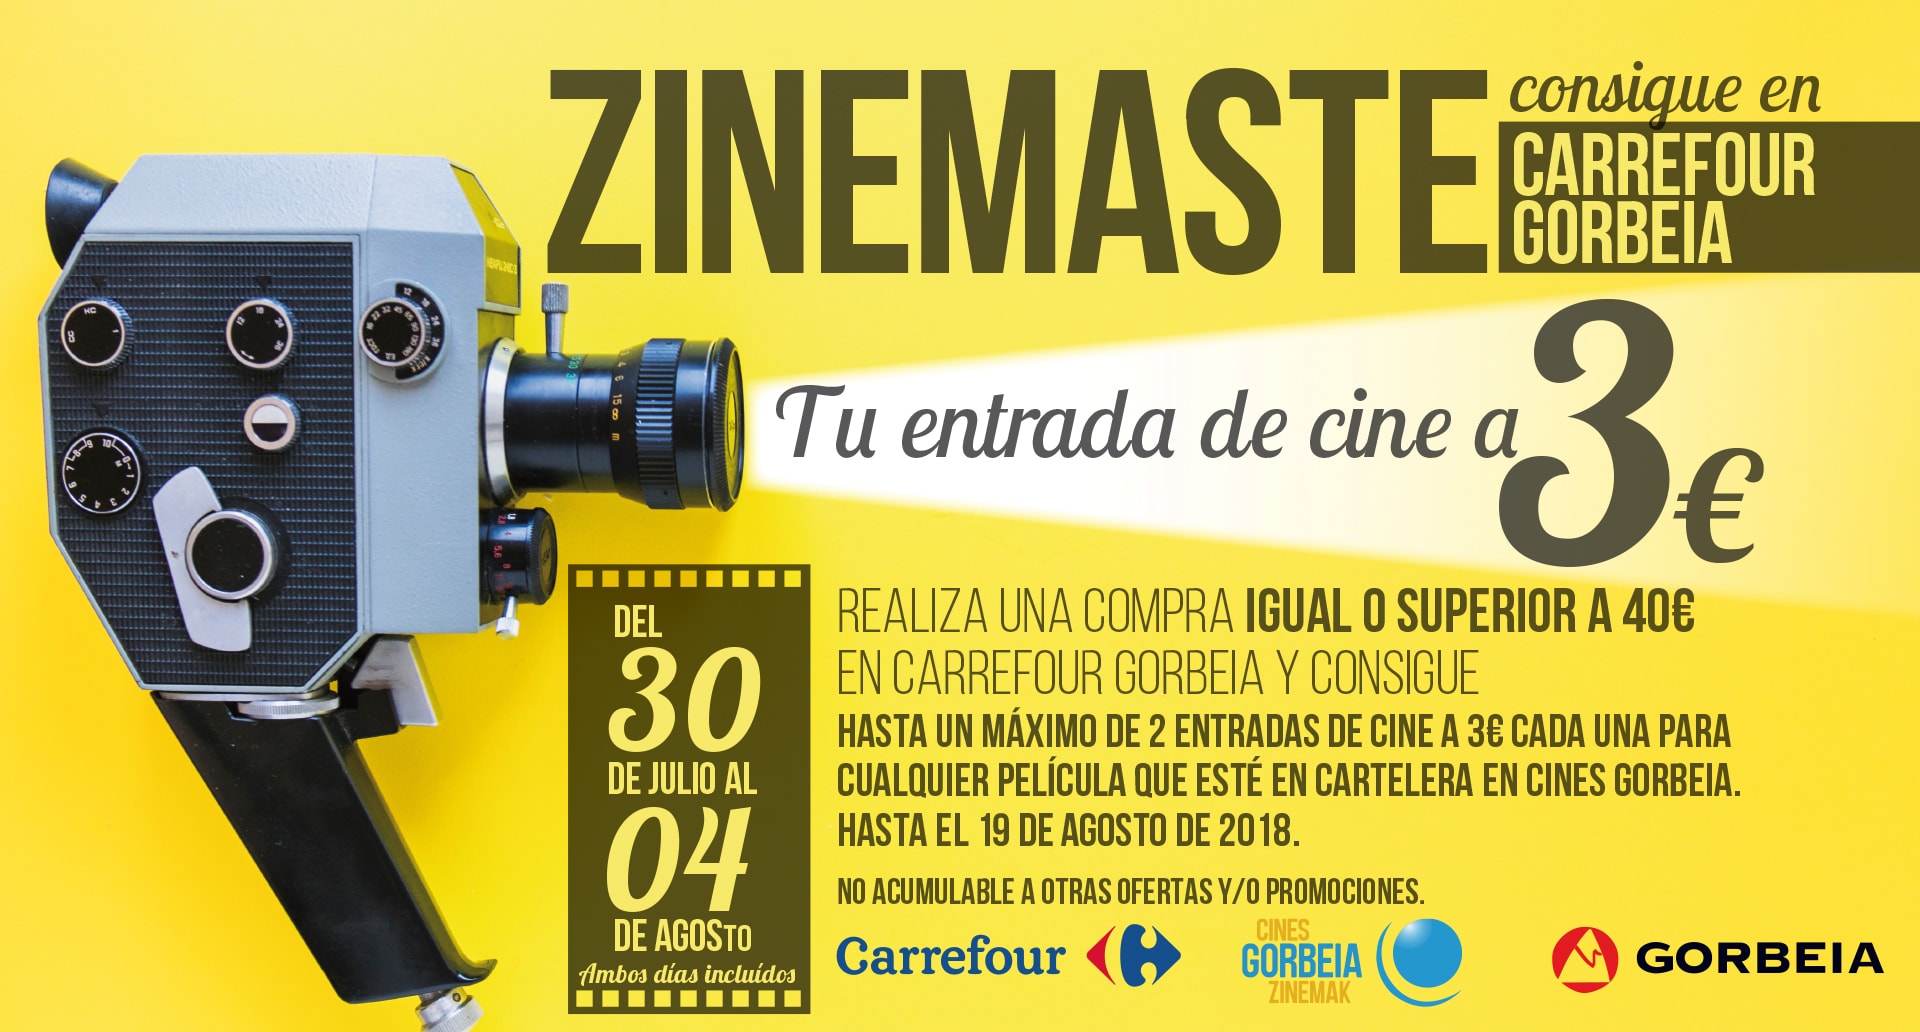 Zinemaste: Consigue tu entrada de cine en Carrefour Gorbeia a 3 euros. Bases de la promoción